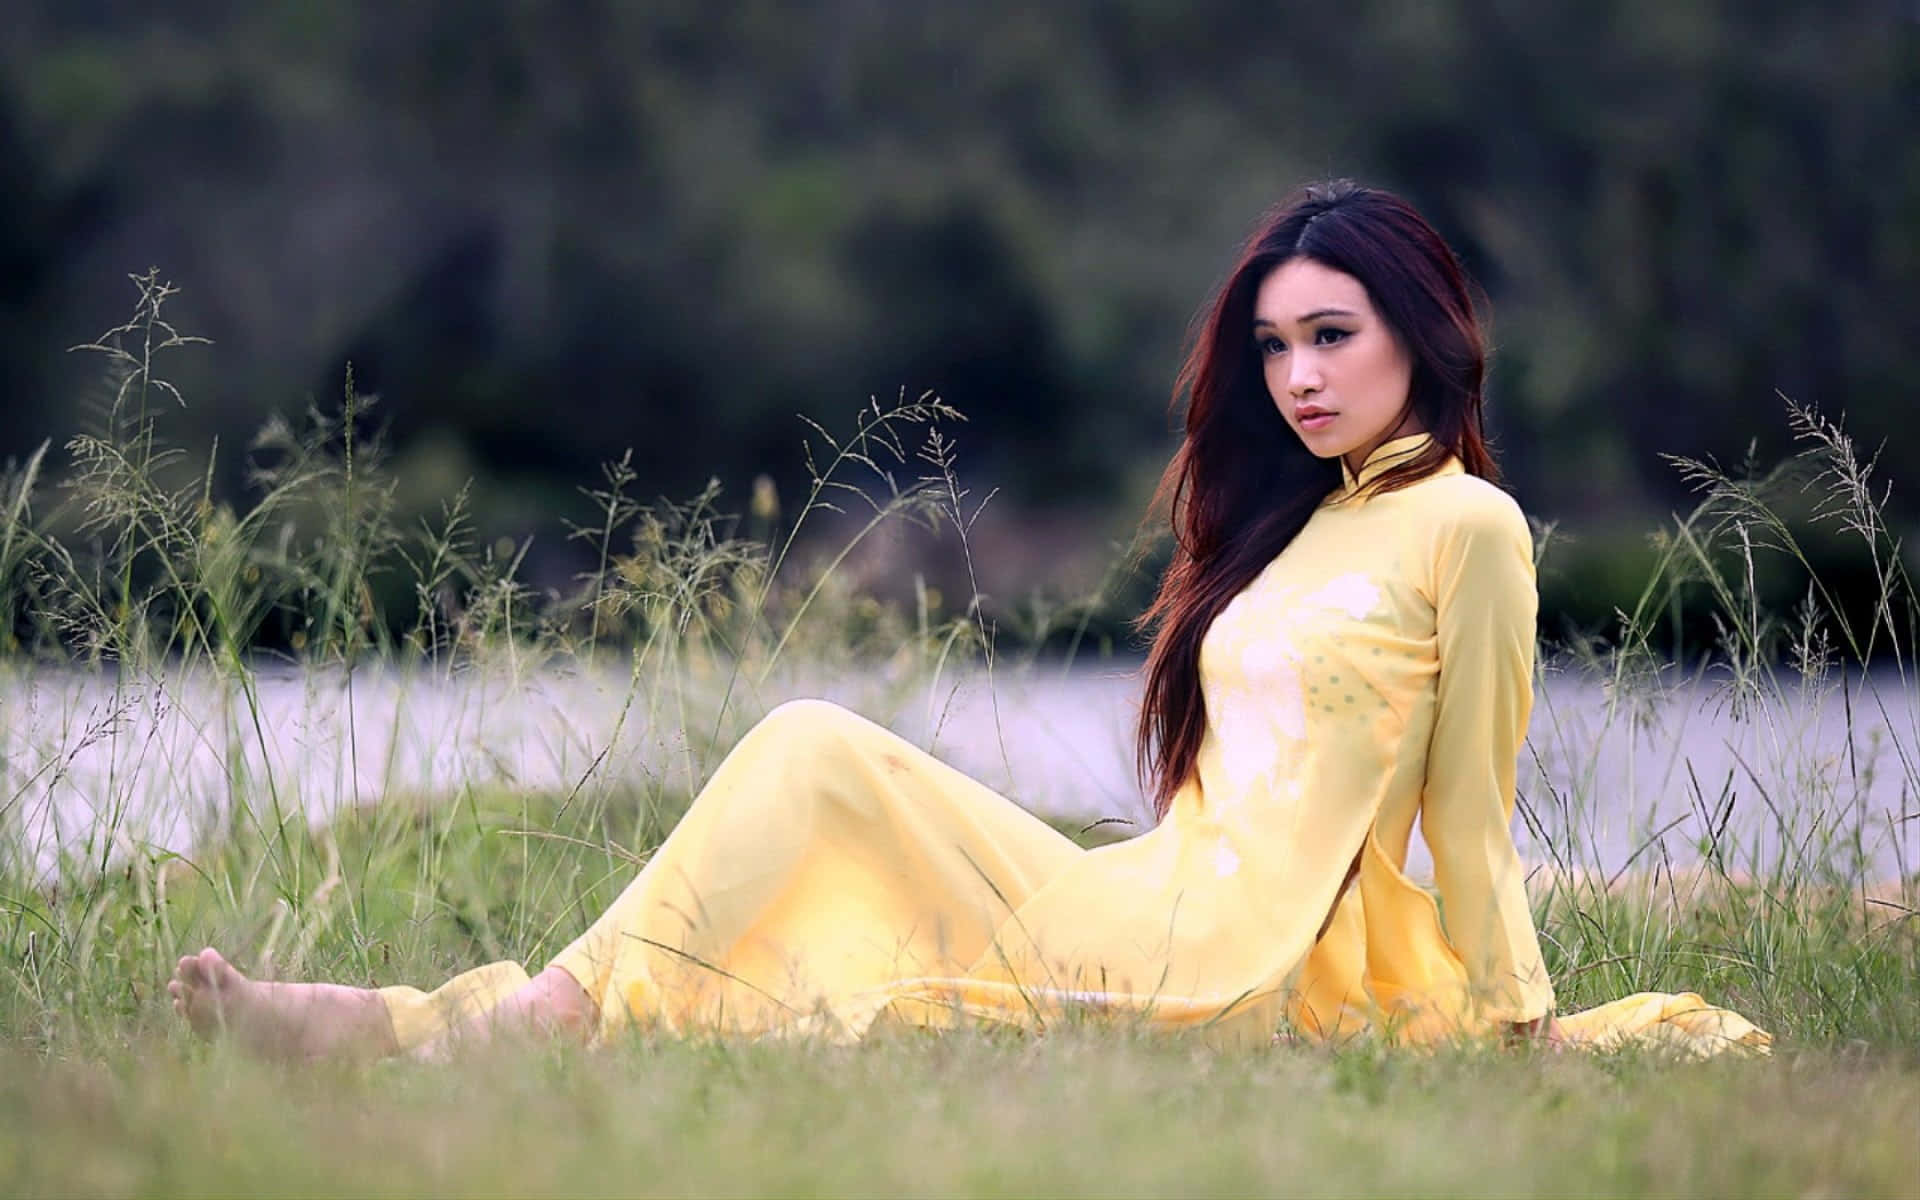 Amateur Model In Yellow Dress Wallpaper